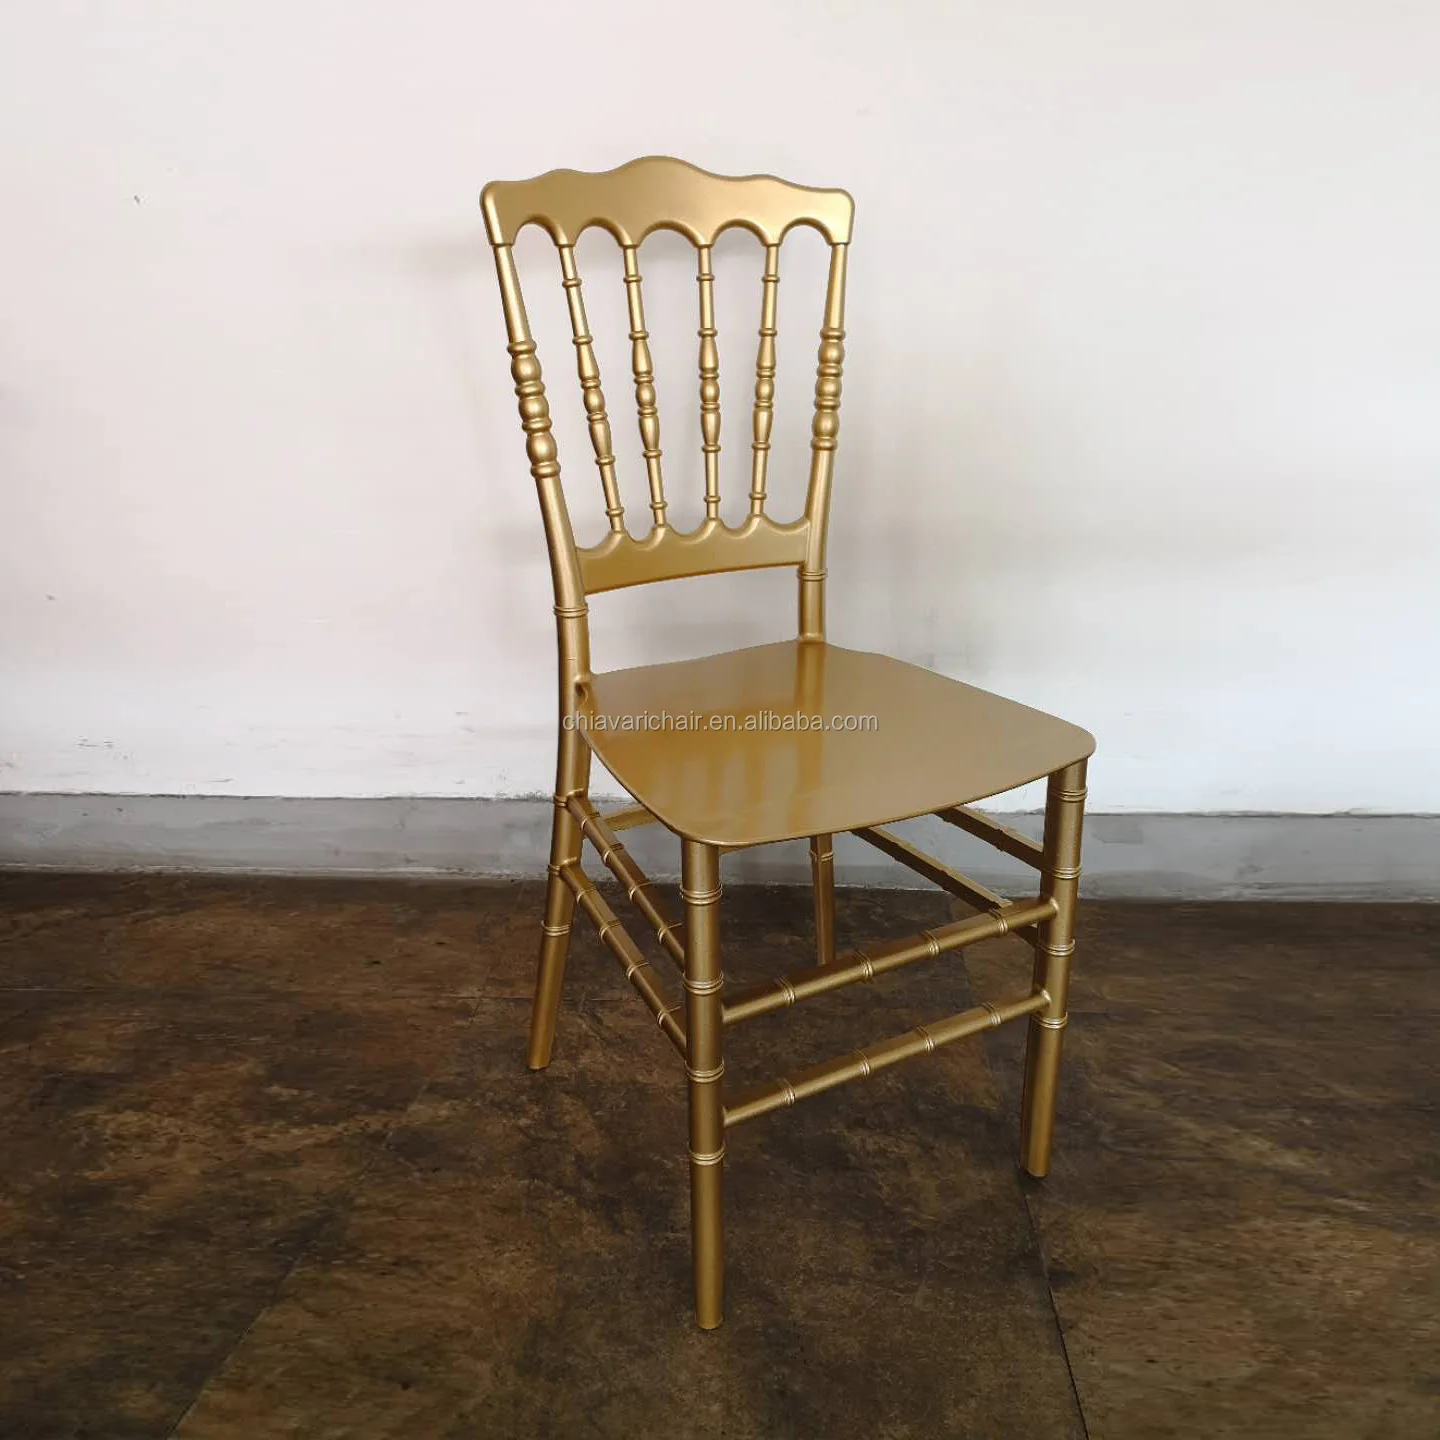 pp napoleon chair1.jpg